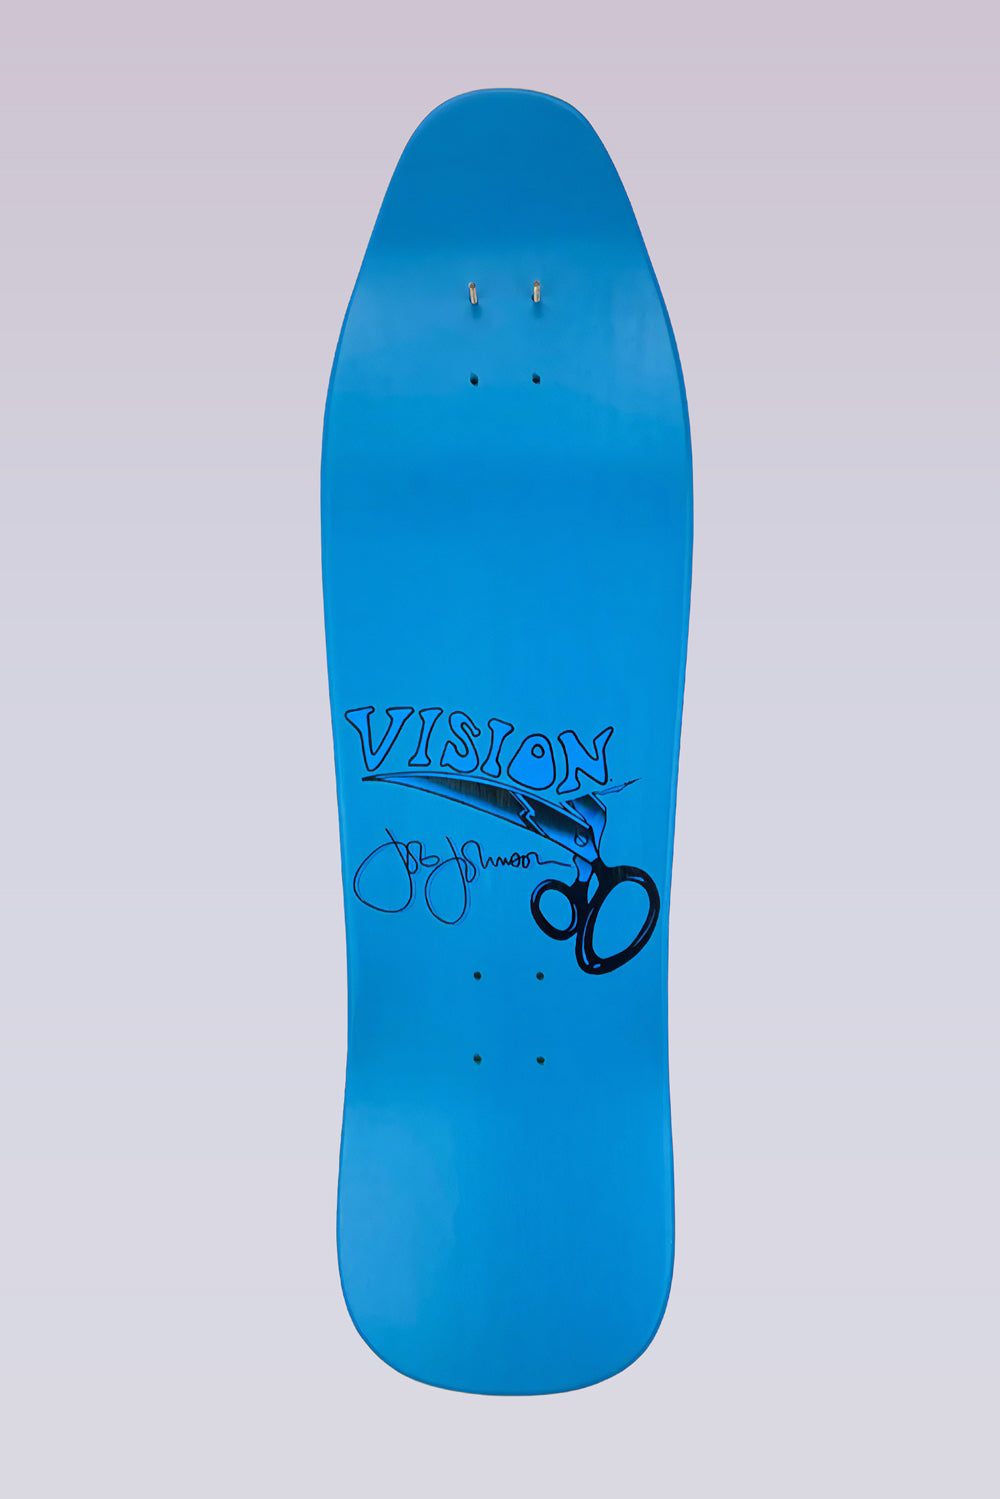 Joe Johnson Scissors Skateboard Deck - 9.5" x 32" - Turquoise Dip